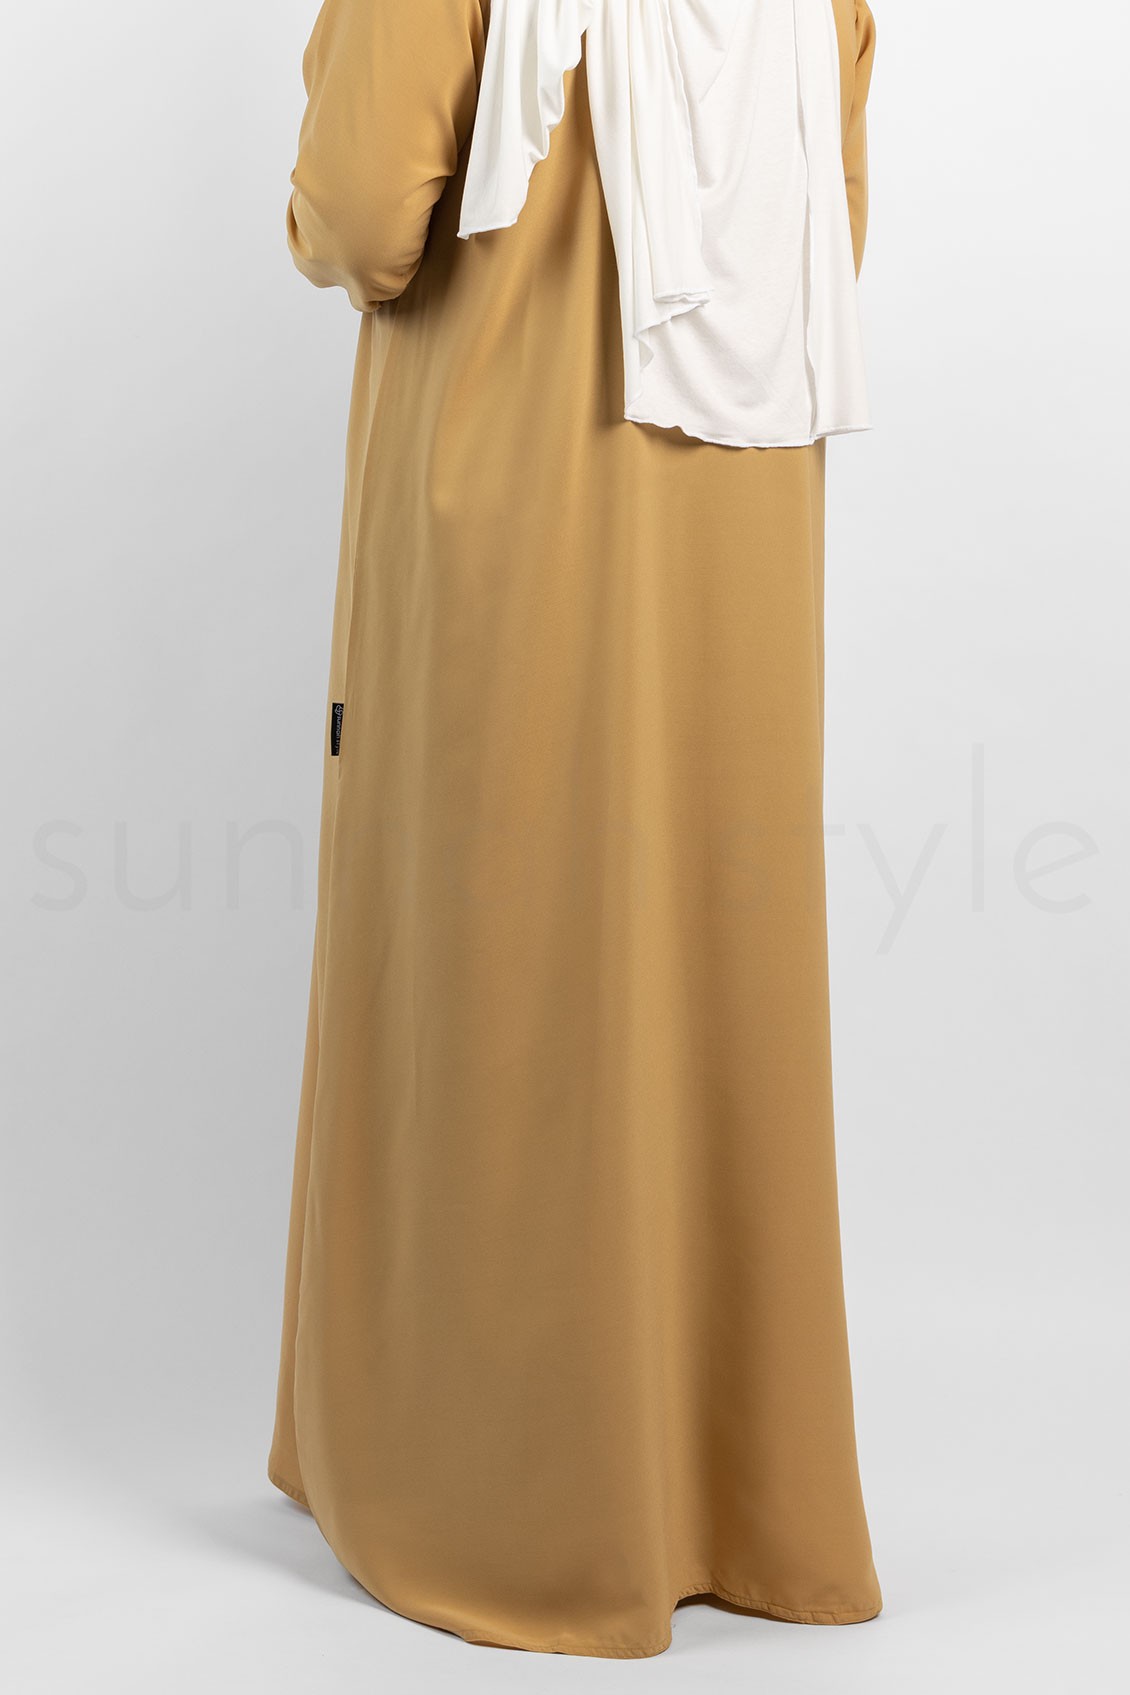 Sunnah Style Plain Closed Abaya Goldenrod